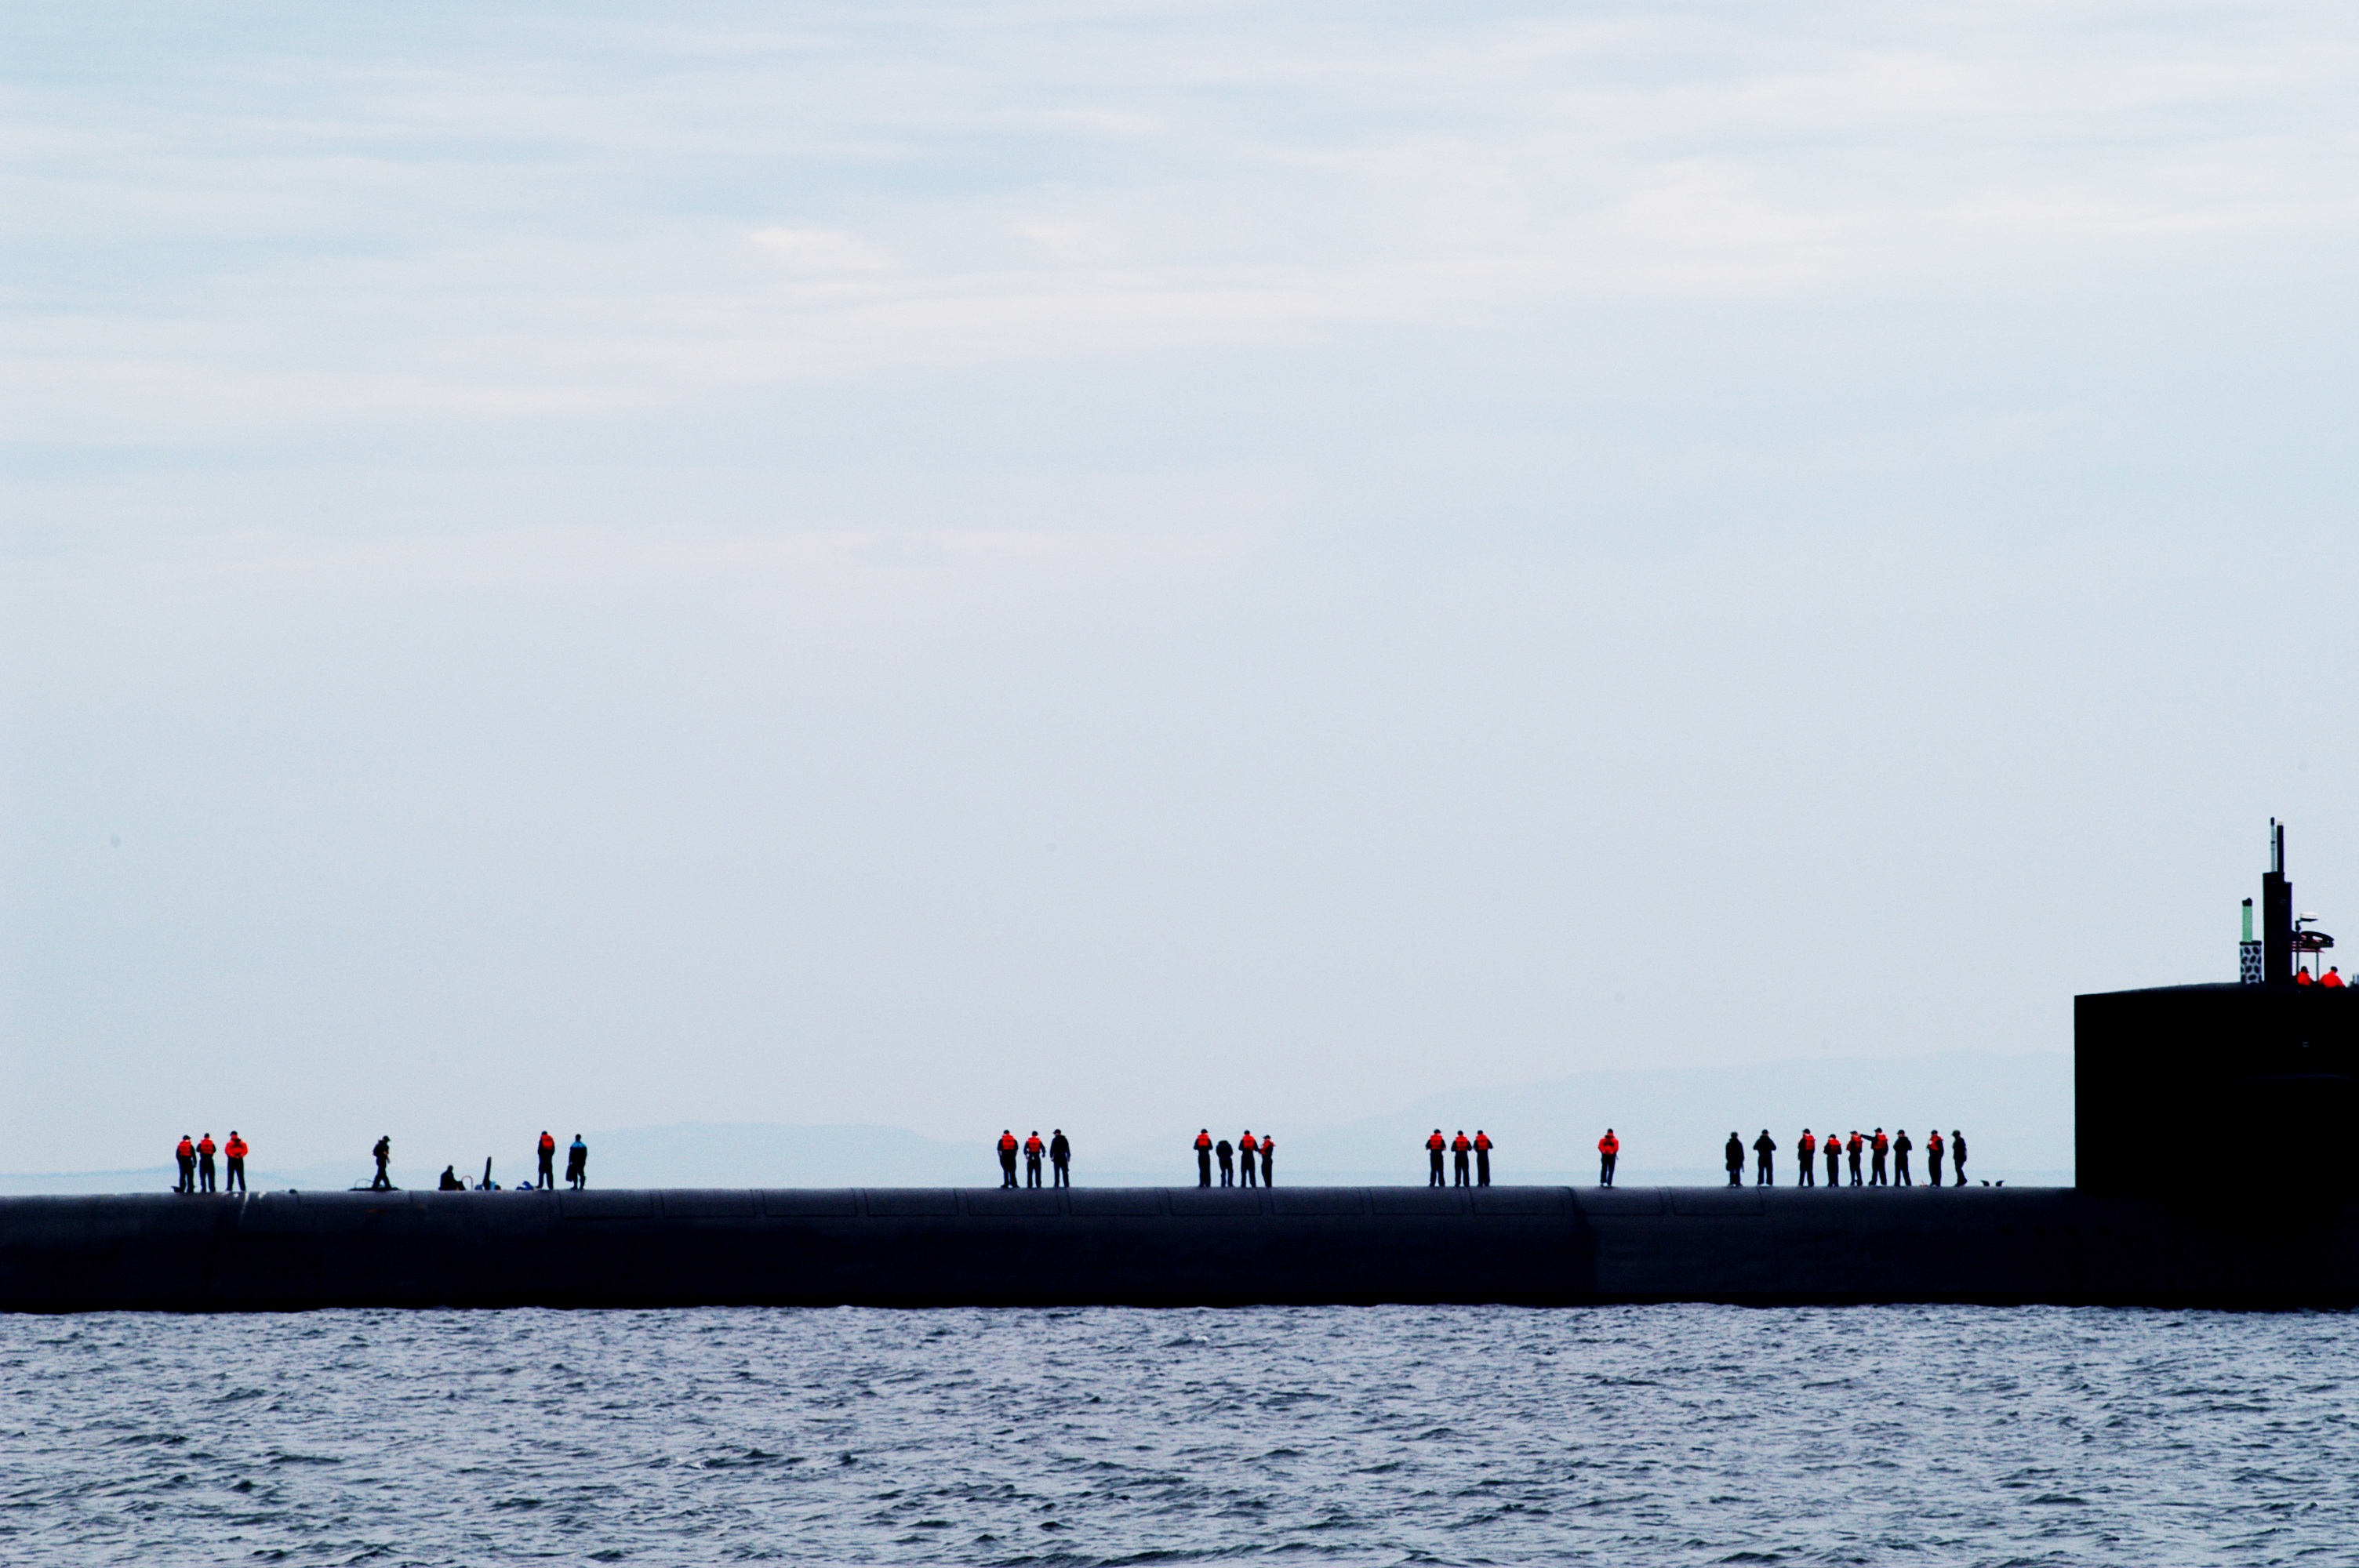 Submarine in the ocean photo